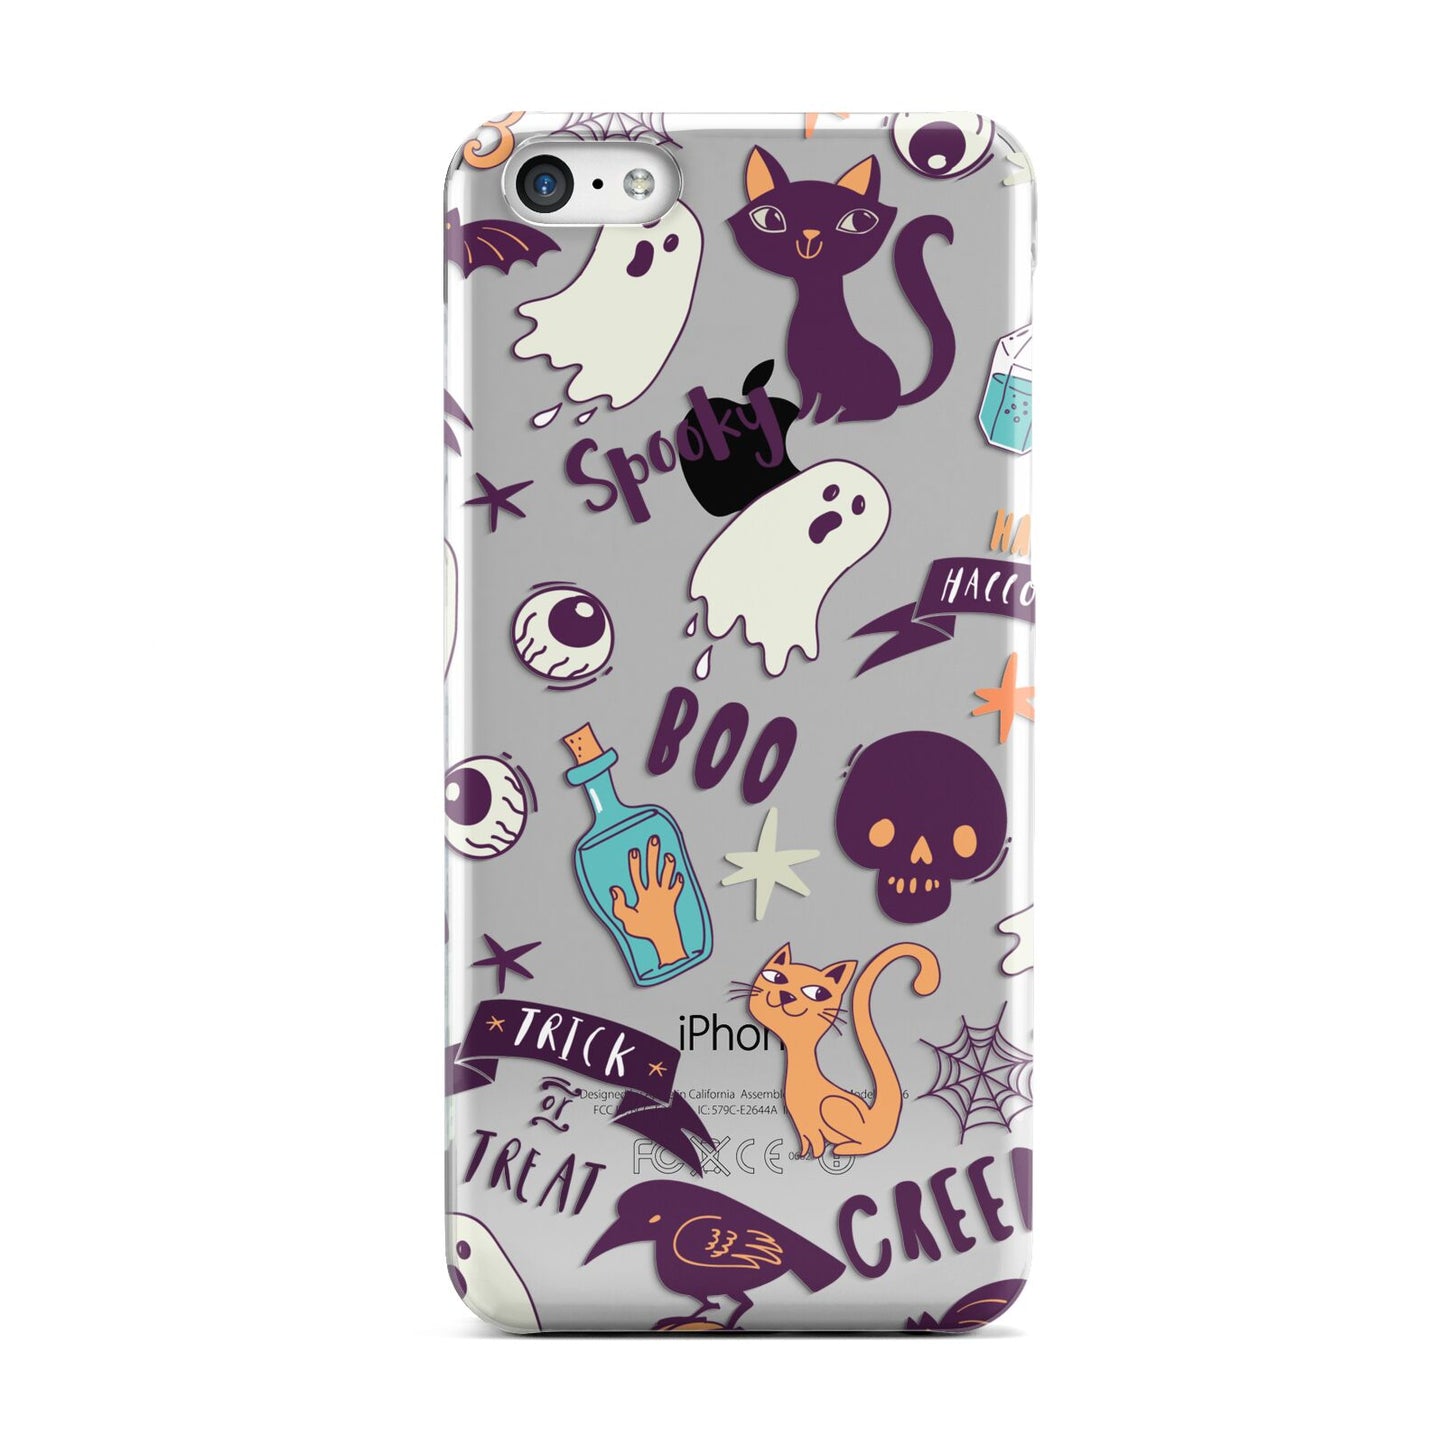 Wacky Purple and Orange Halloween Images Apple iPhone 5c Case